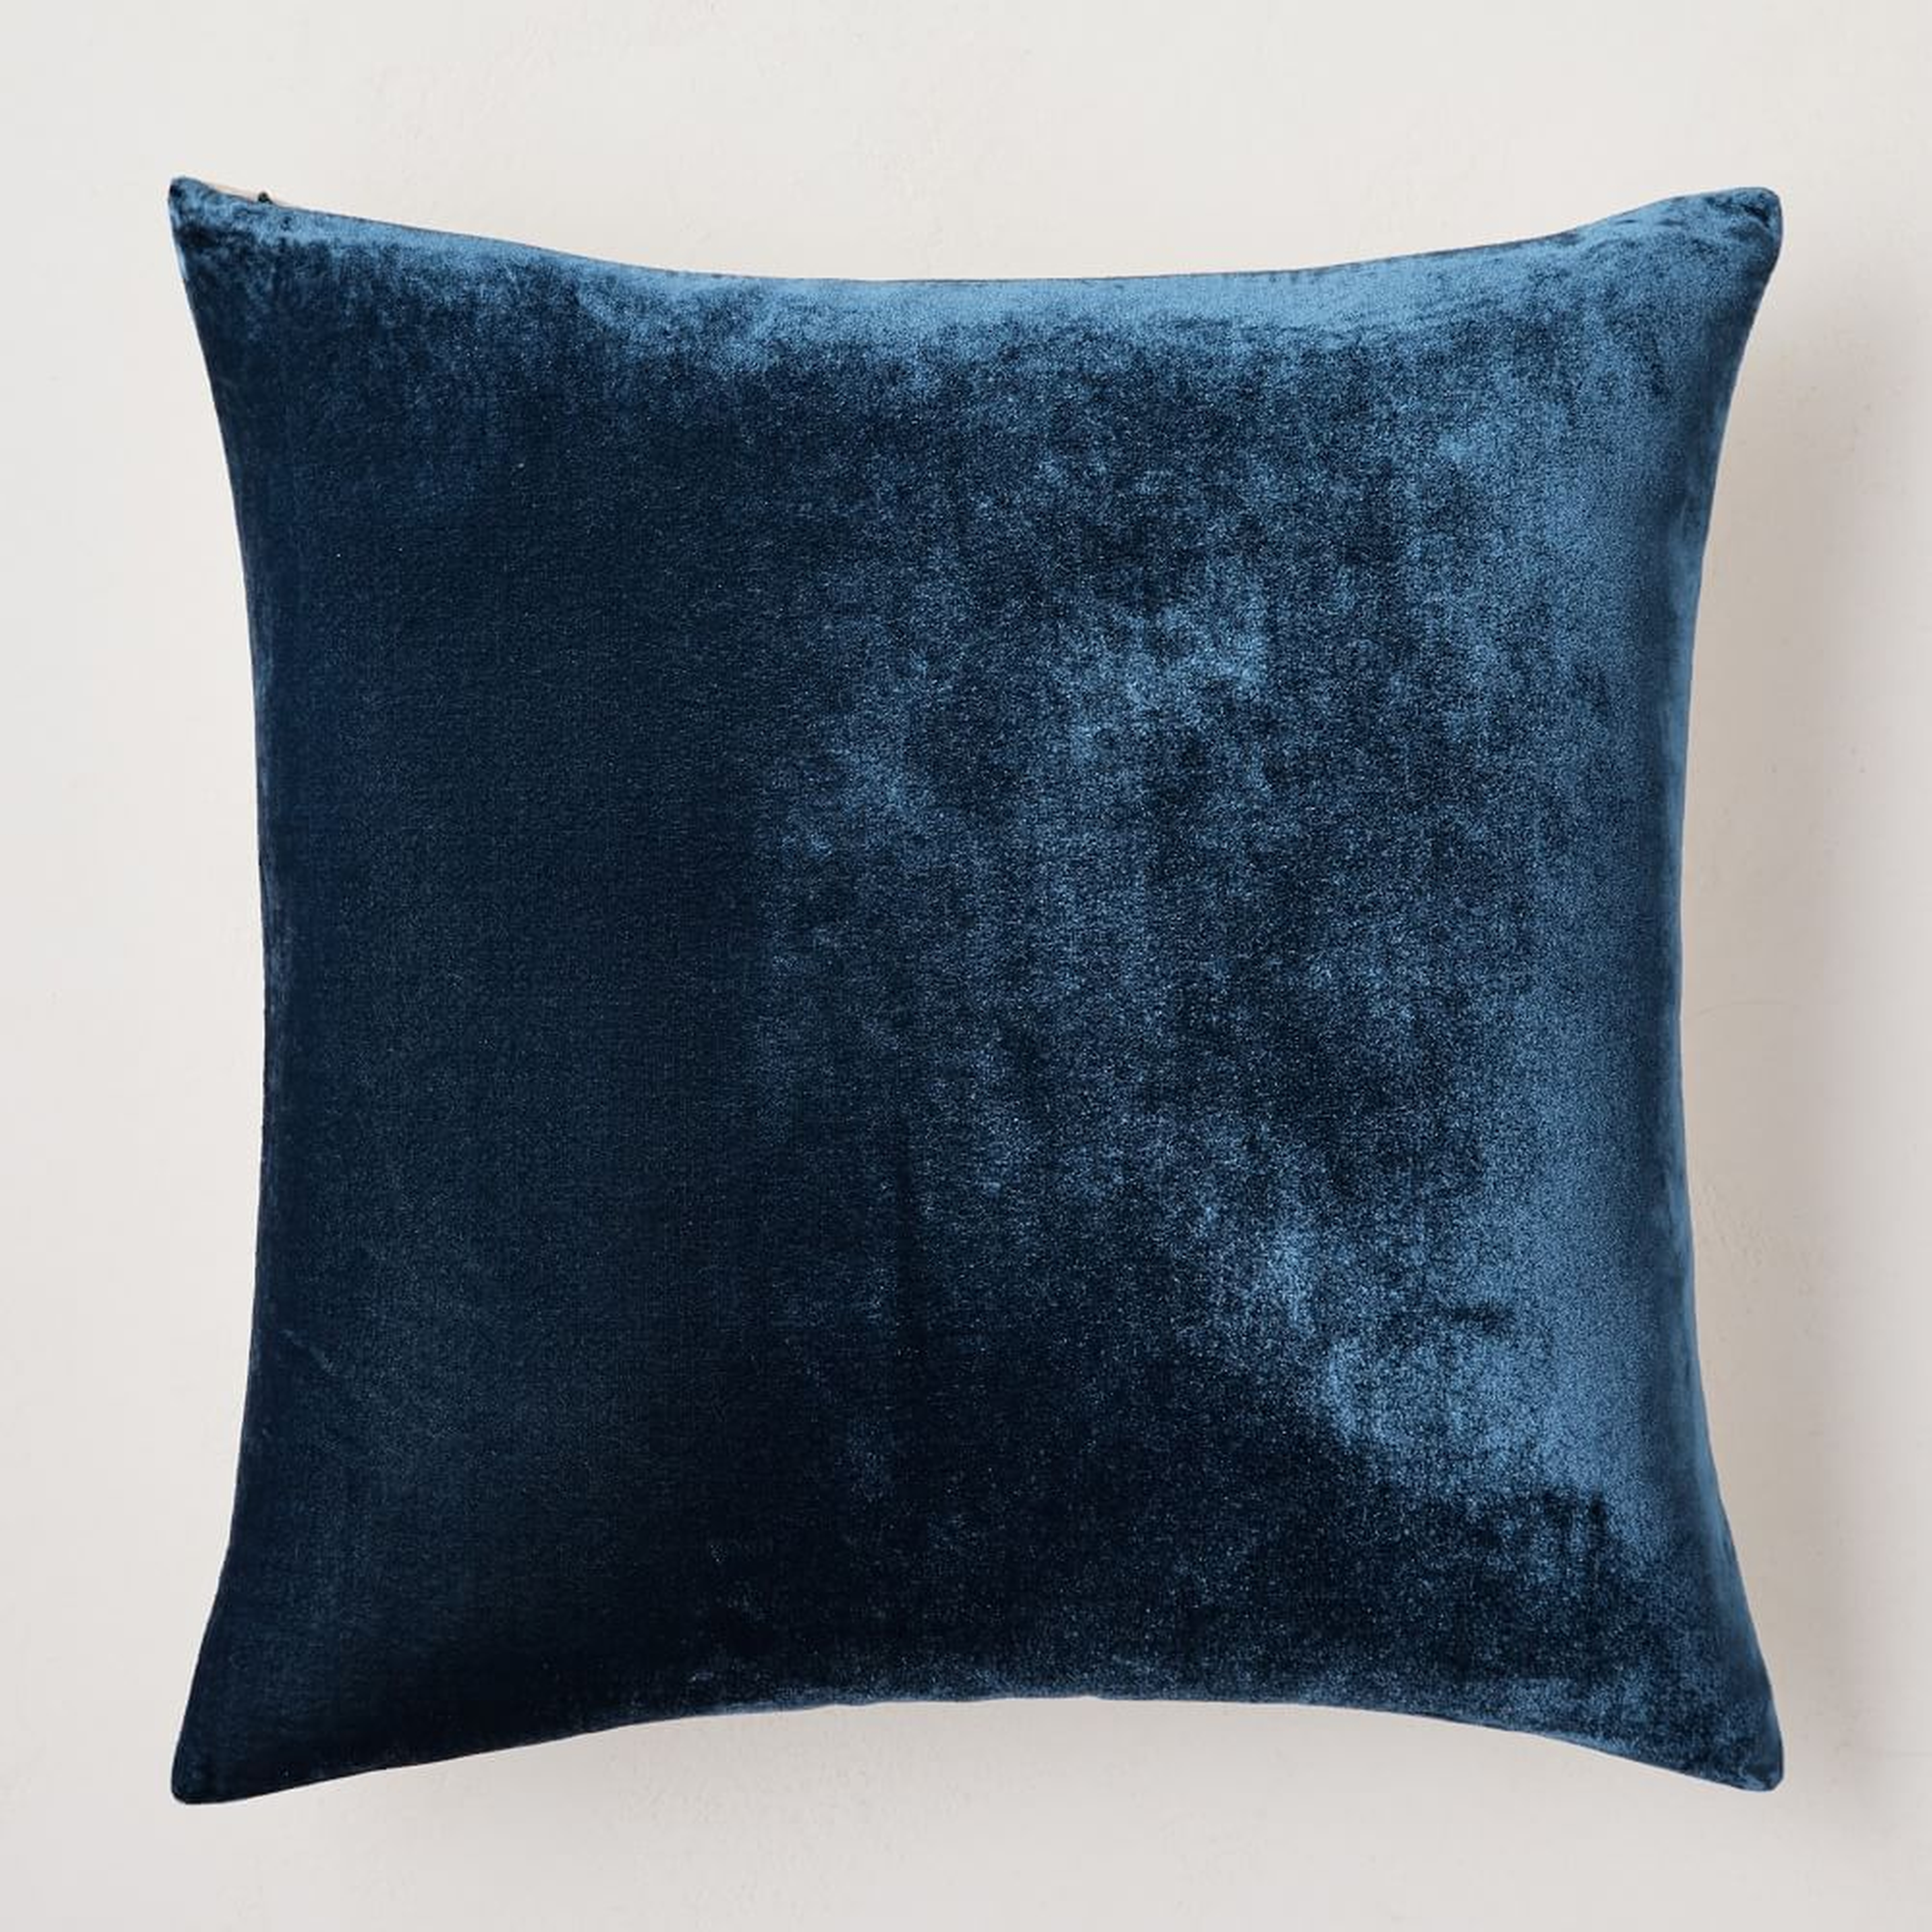 Lush Velvet Pillow Cover, 16"x16", Regal Blue - West Elm